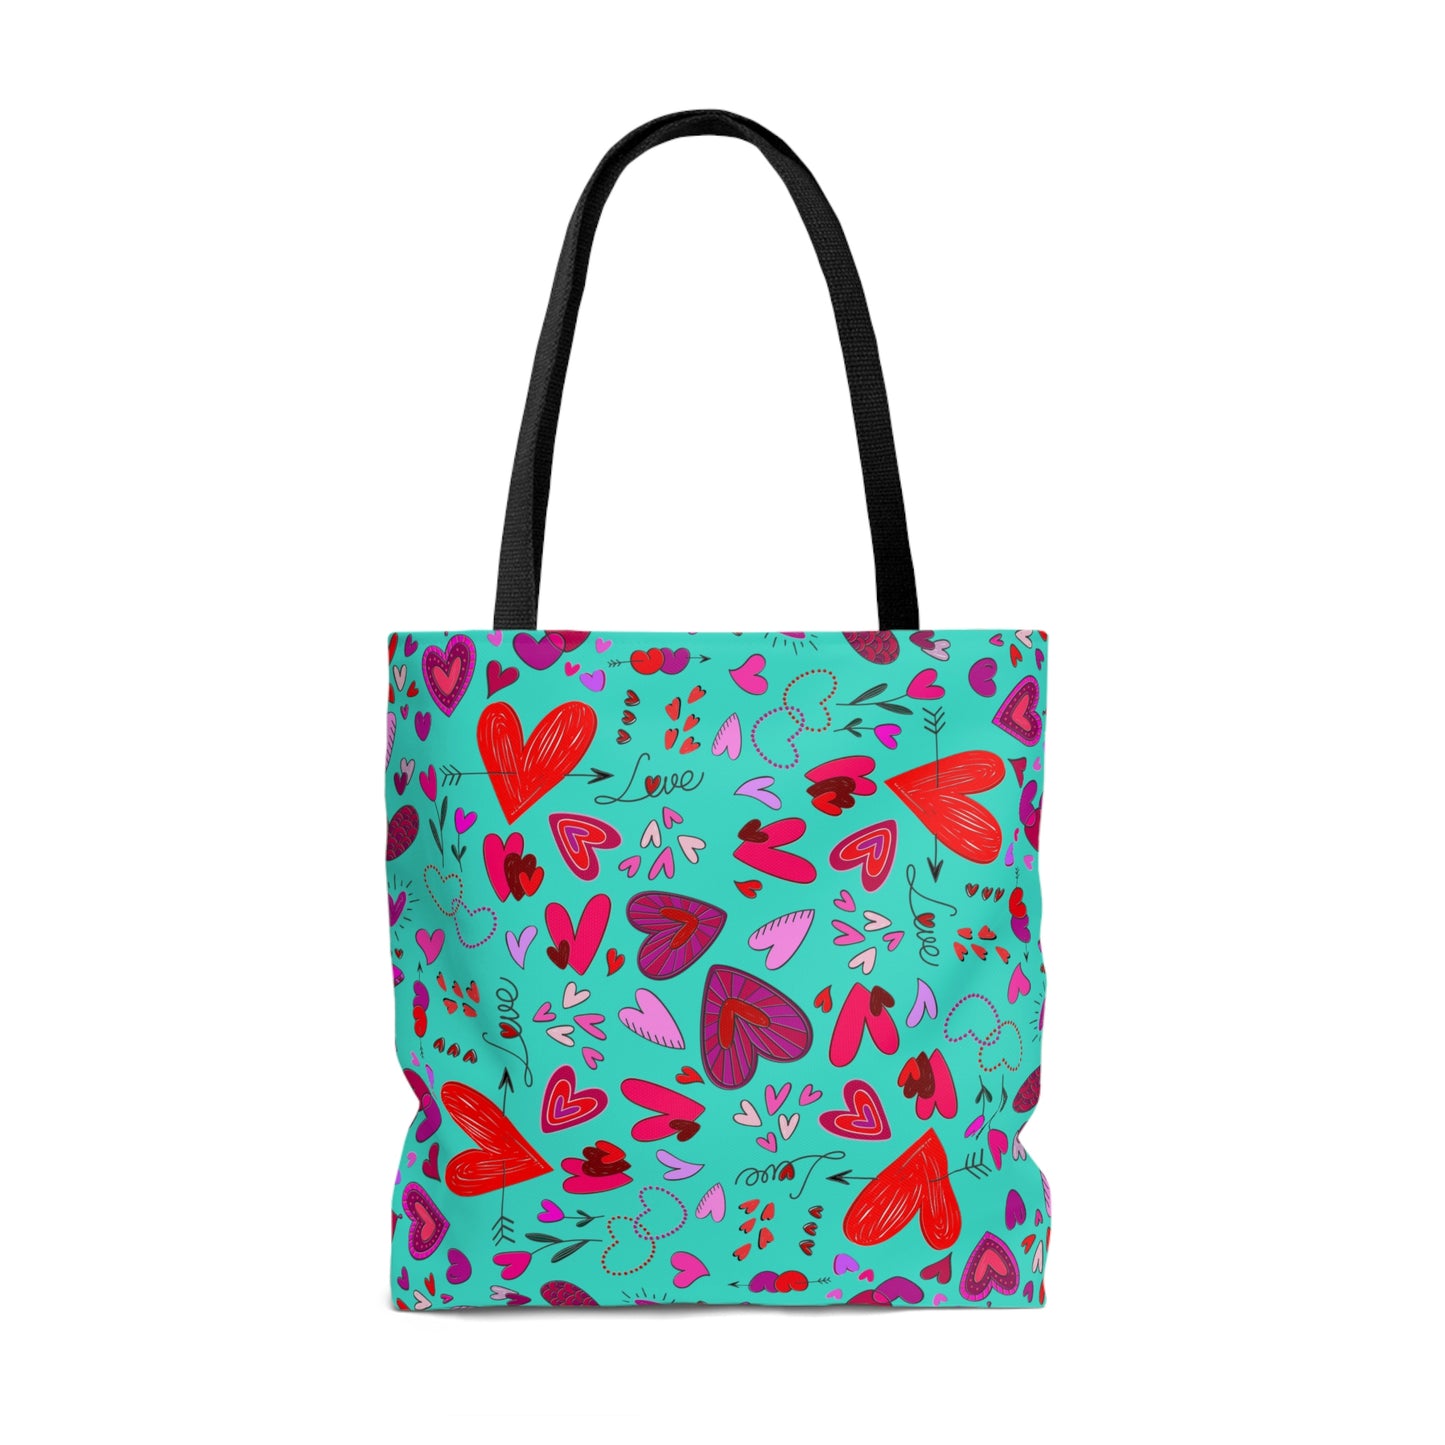 Heart Doodles - Turquoise 40e0d0 - Tote Bag